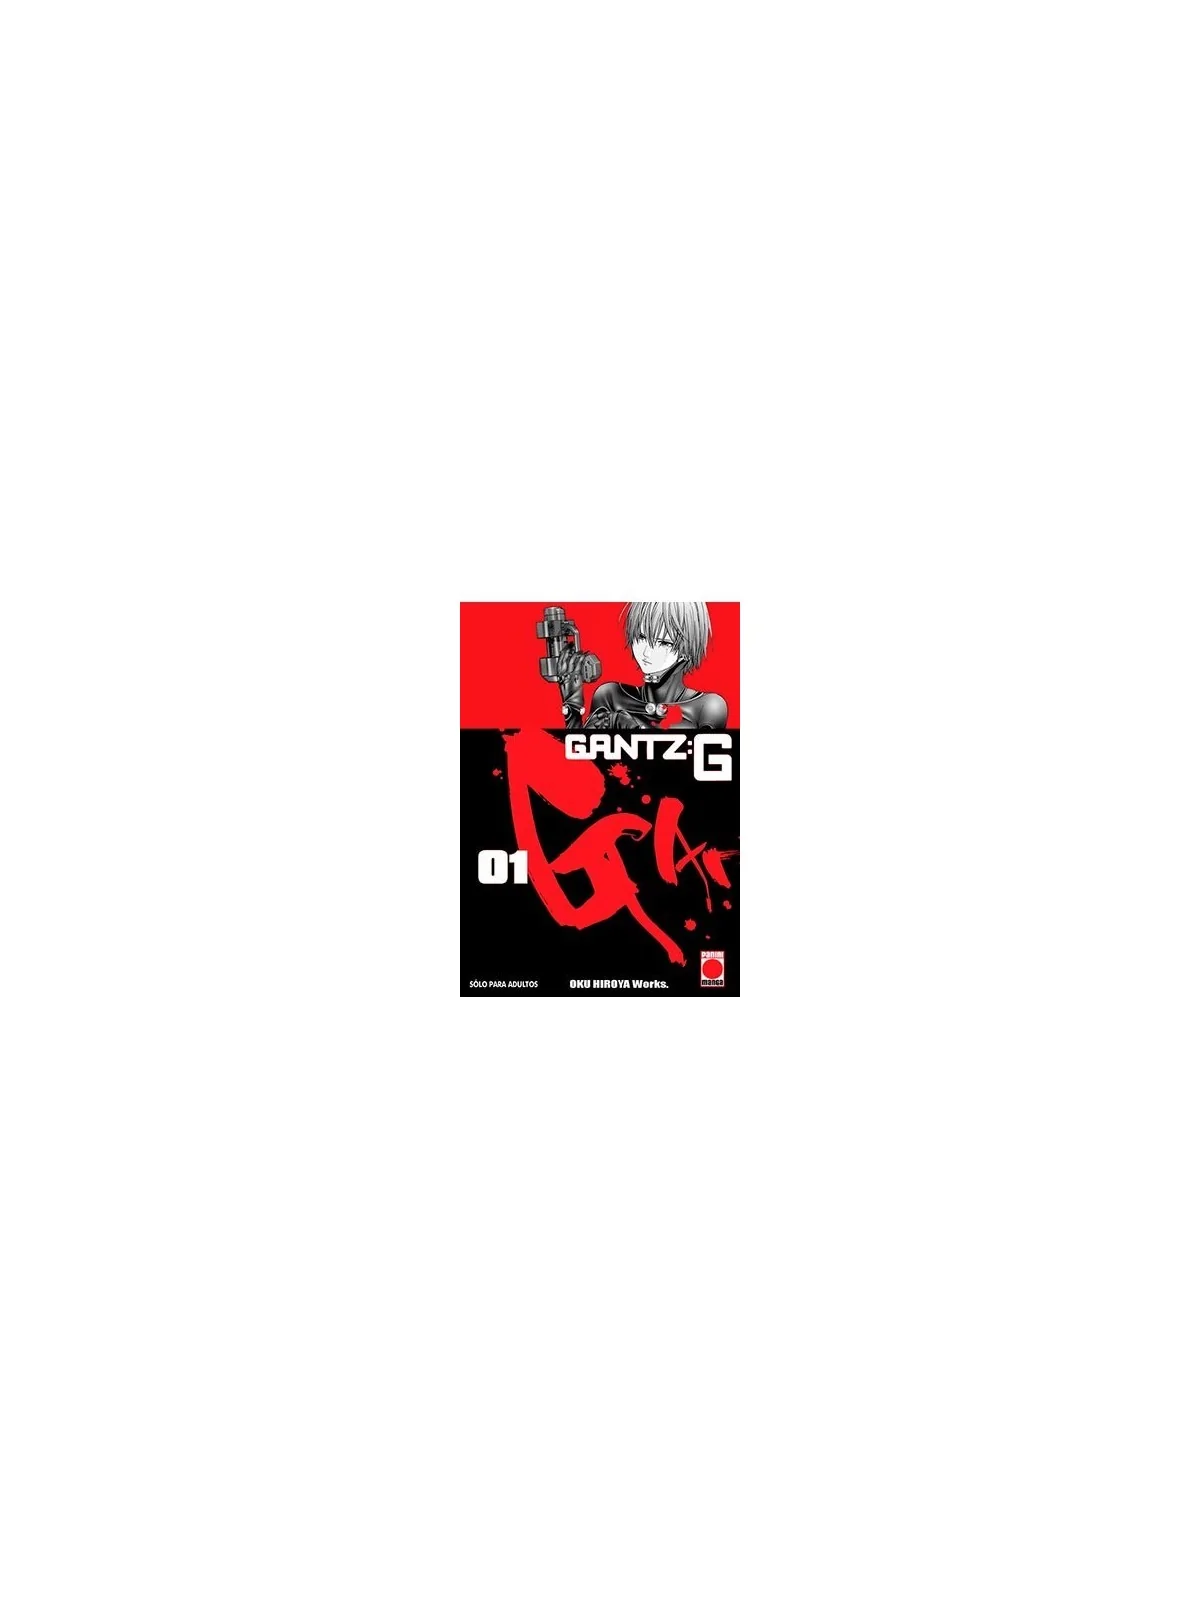 Comprar Gantz G 01 barato al mejor precio 8,51 € de Panini Comics